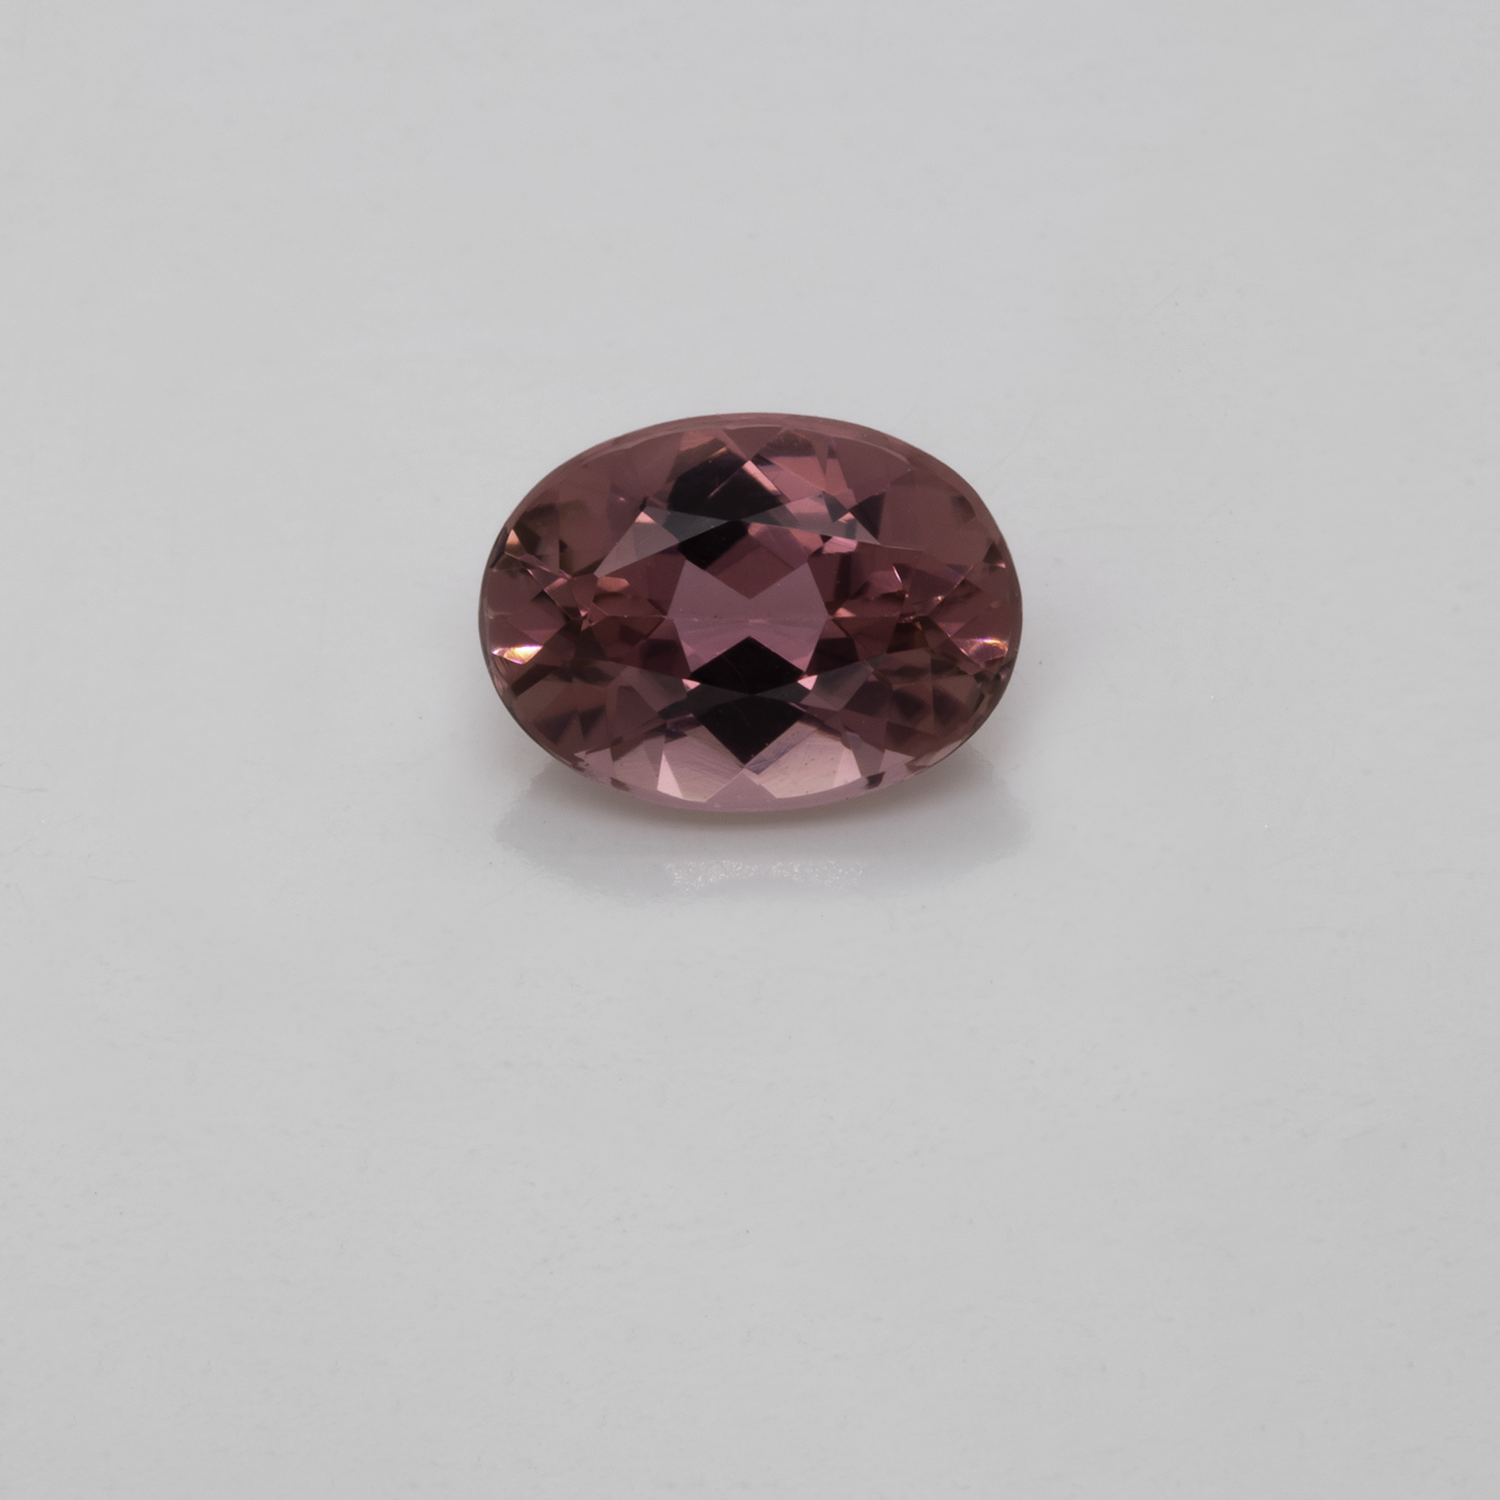 Tourmaline - pink, oval, 7x5 mm, 0.65-0.78 cts, No. TR12003